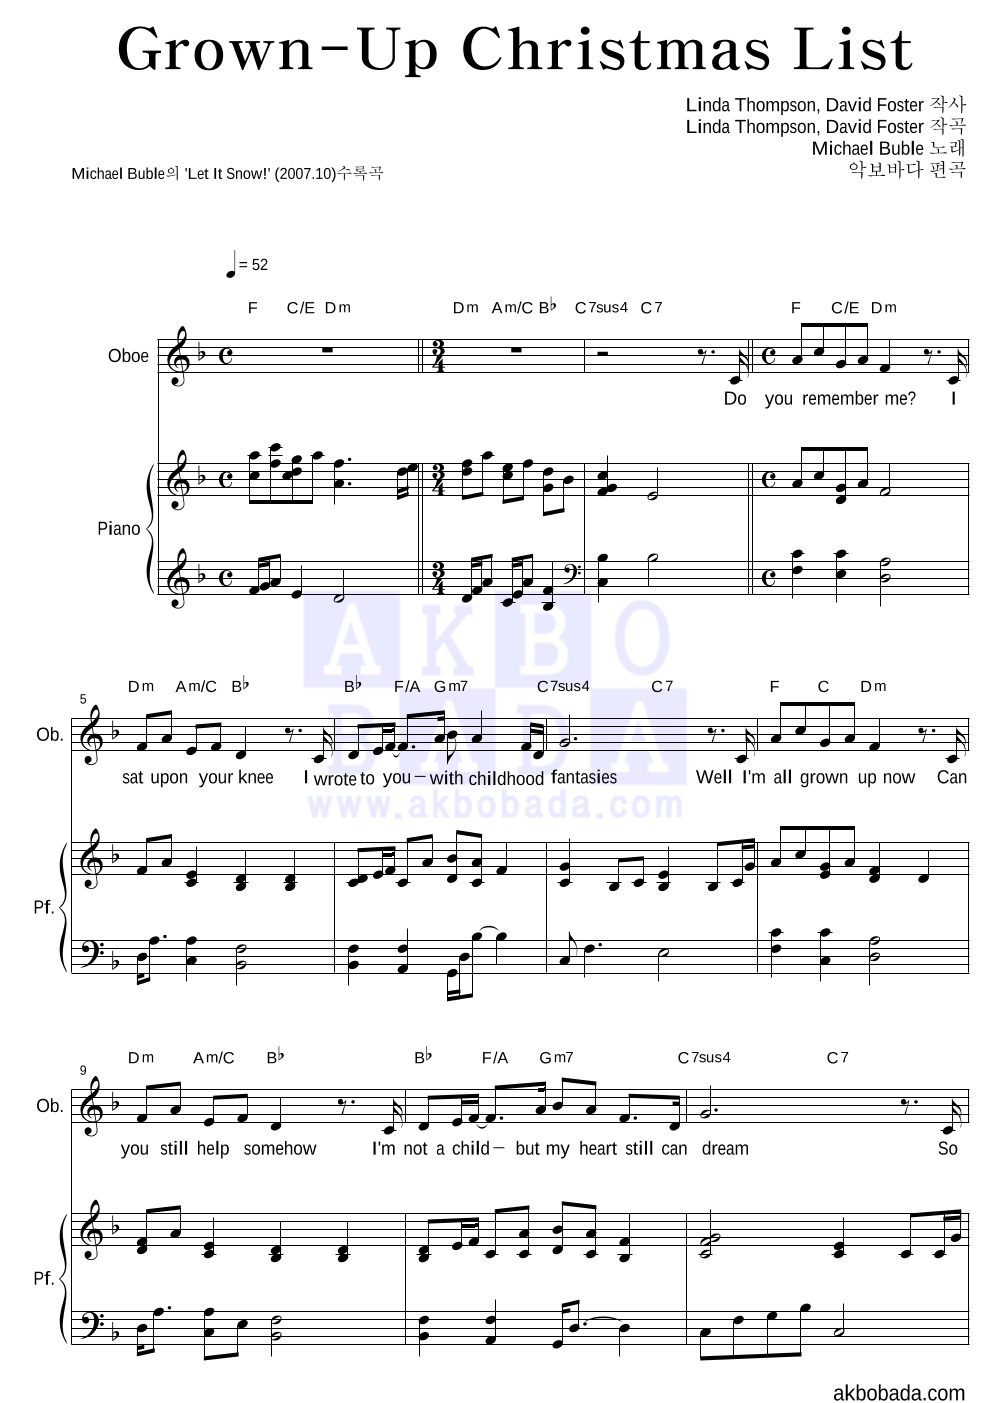 Michael Buble - Grown-Up Christmas List 오보에&피아노 악보 